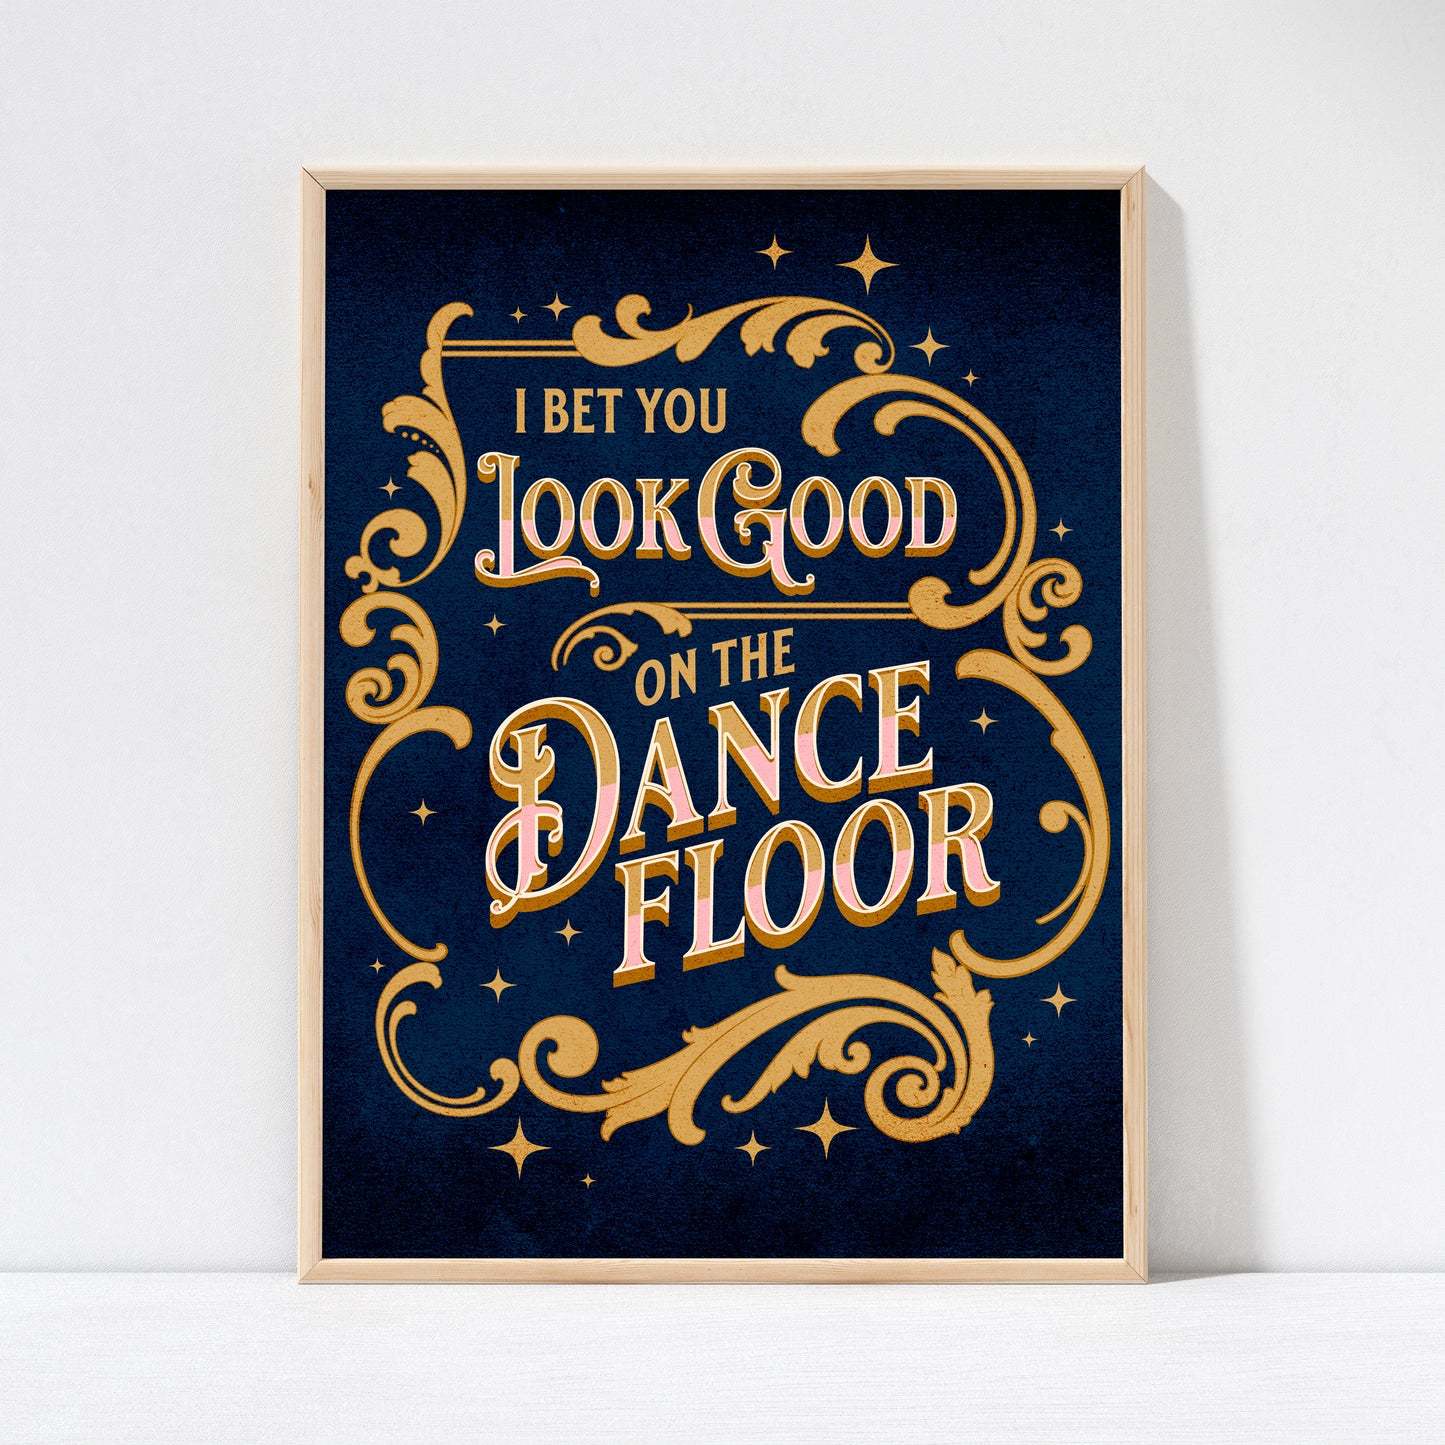 Good on the dance floor music lyrics art print poster